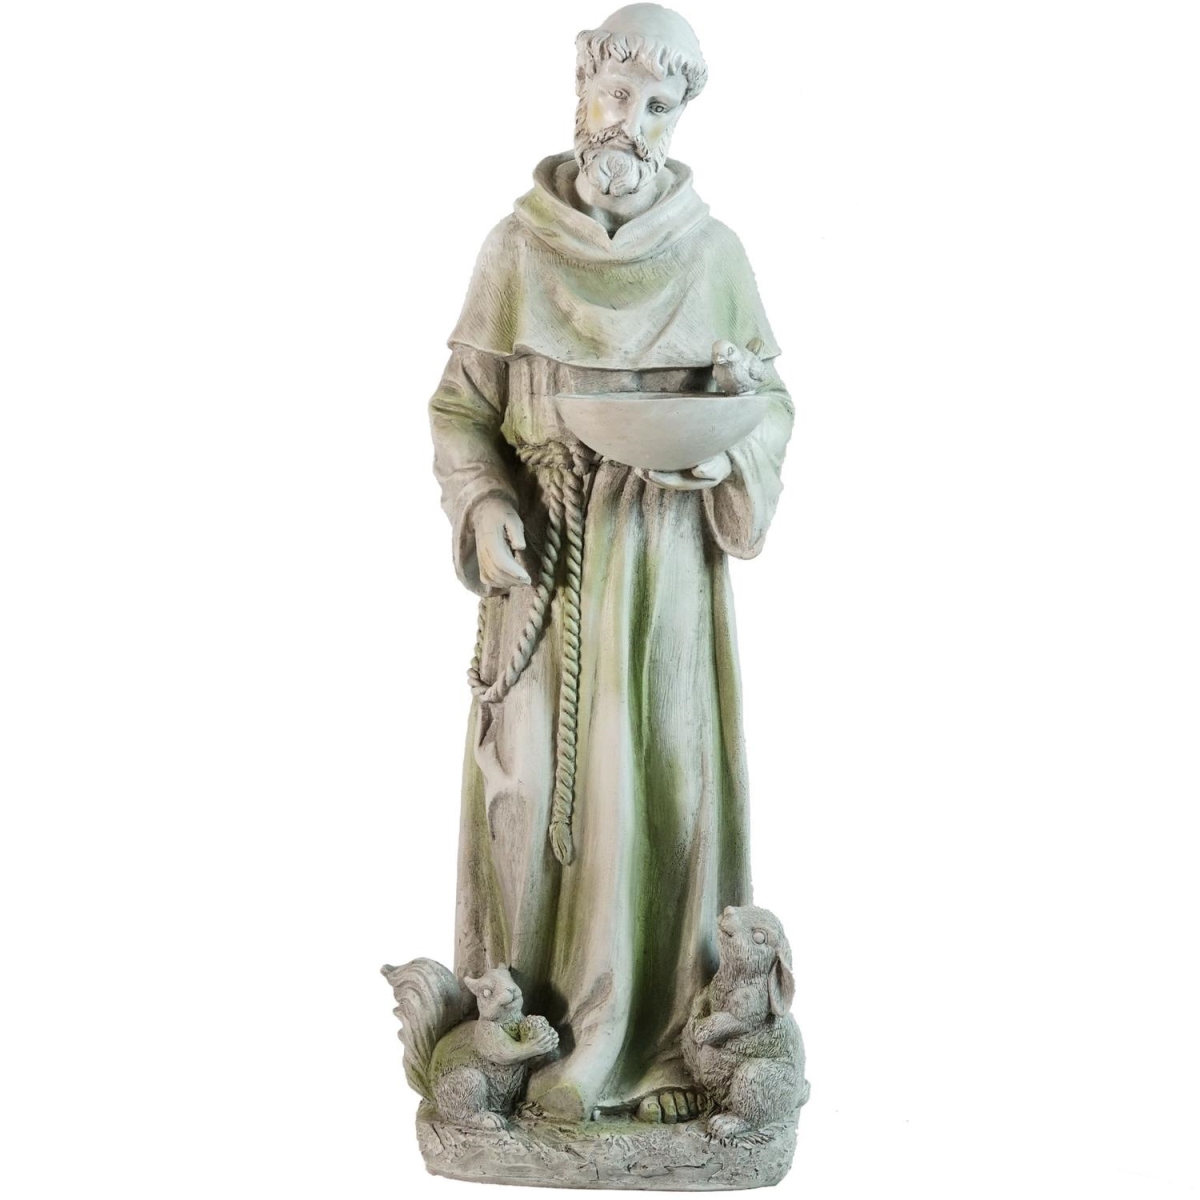 Northlight 32588592 23.5 in. Standing Religious St. Francis of Assisi Bird Feeder Outdoor Garden Statue